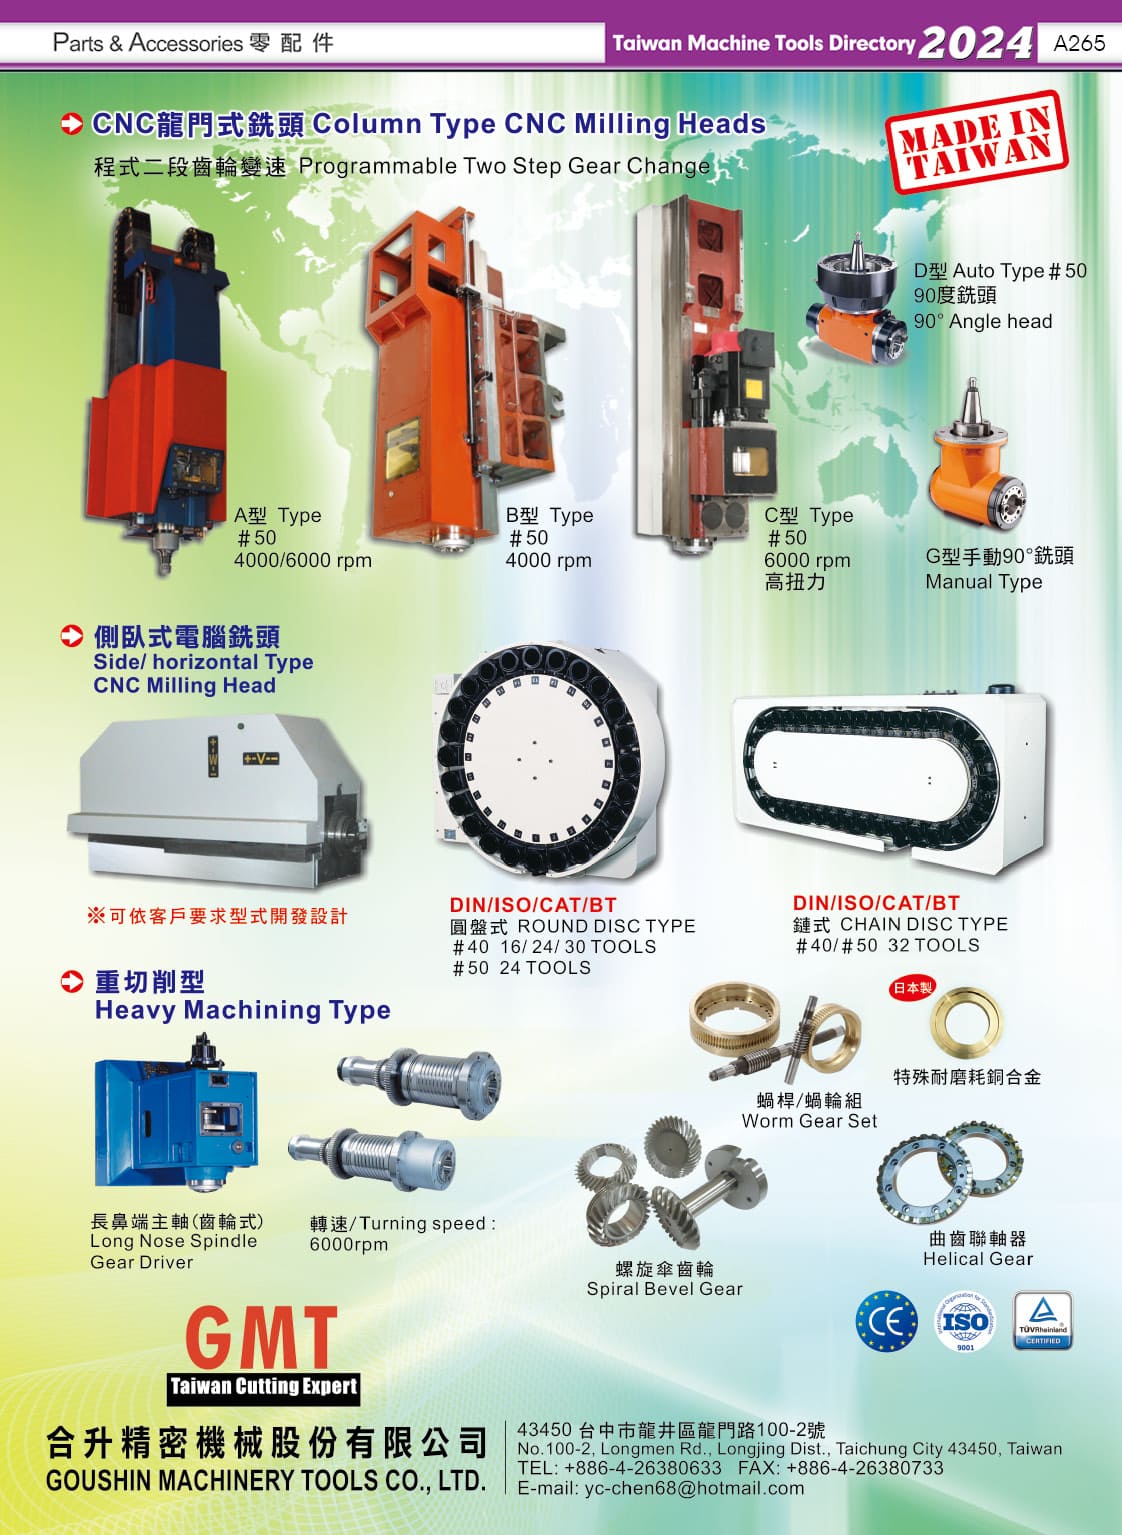 2024 TAIWAN MACHINE TOOLS DIRECTORY-1